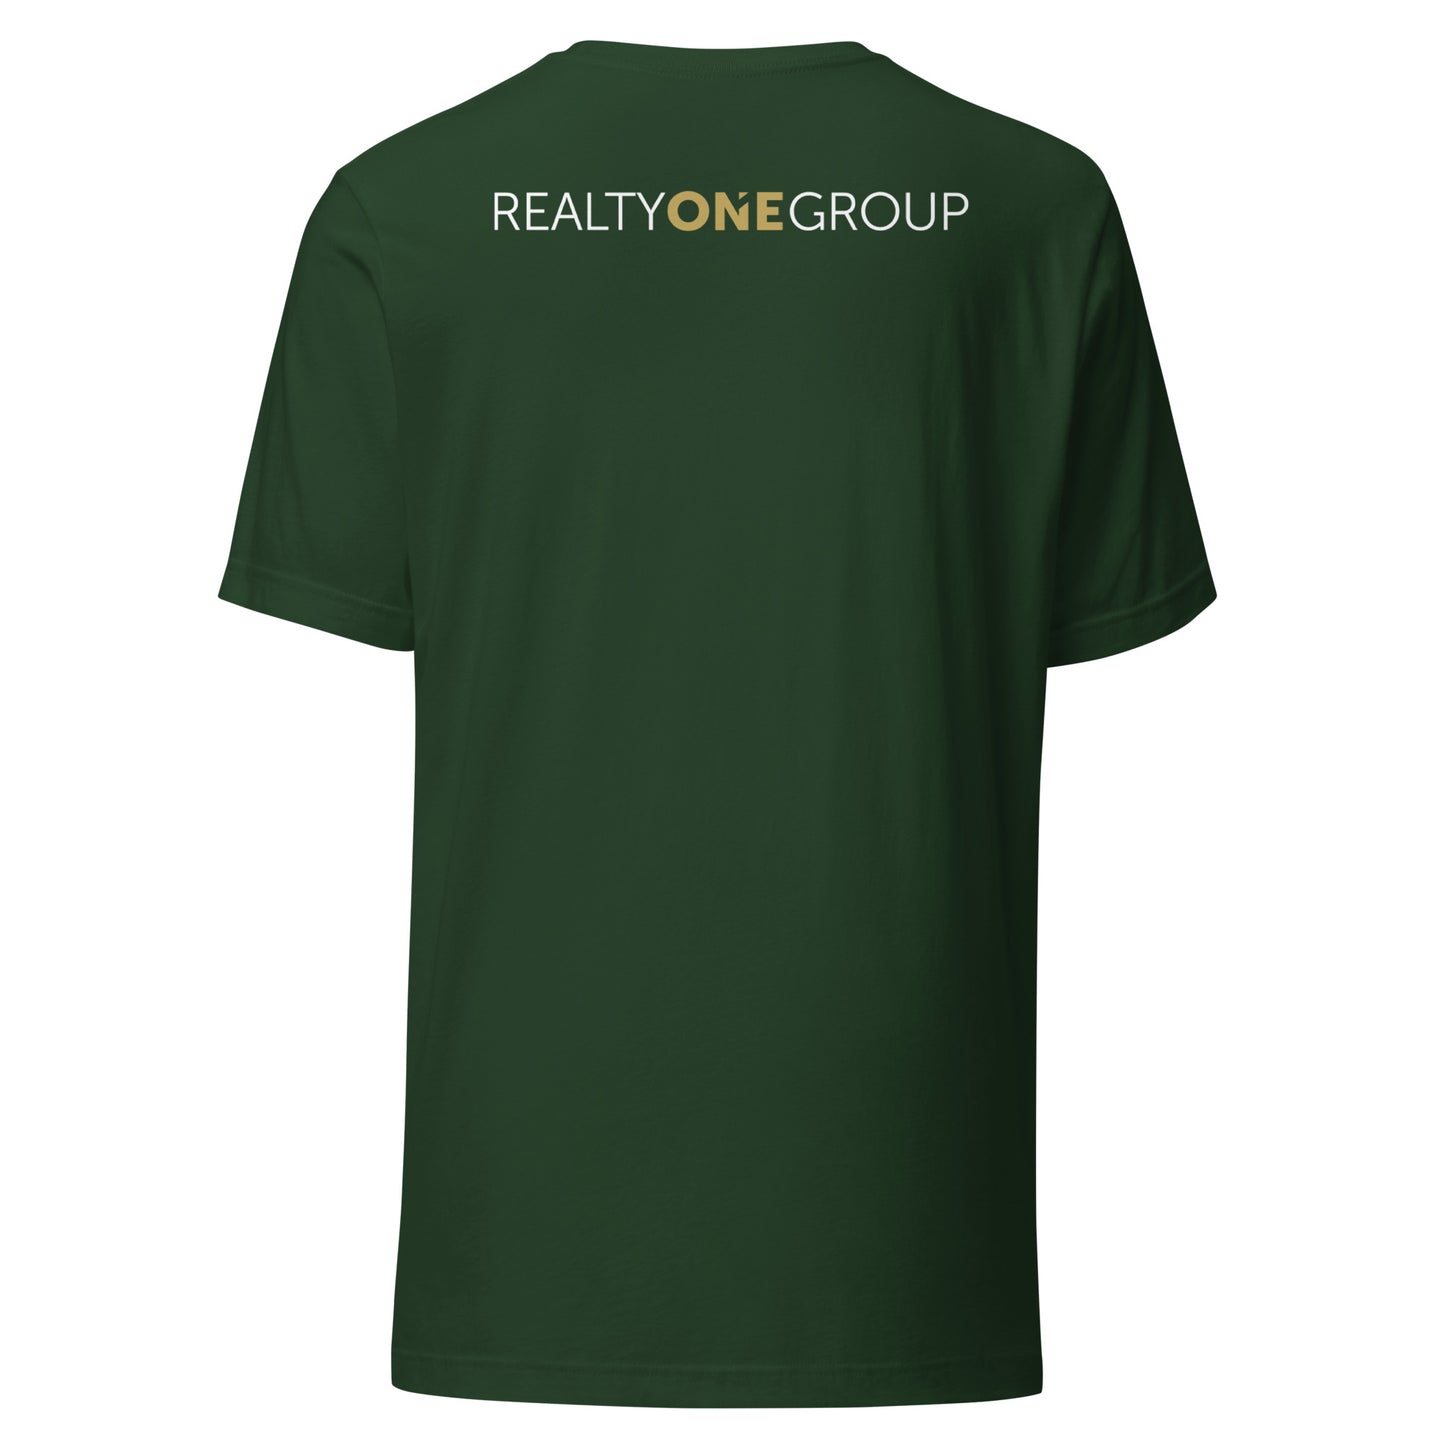 ONE Unisex Community T-Shirt (Cursive)